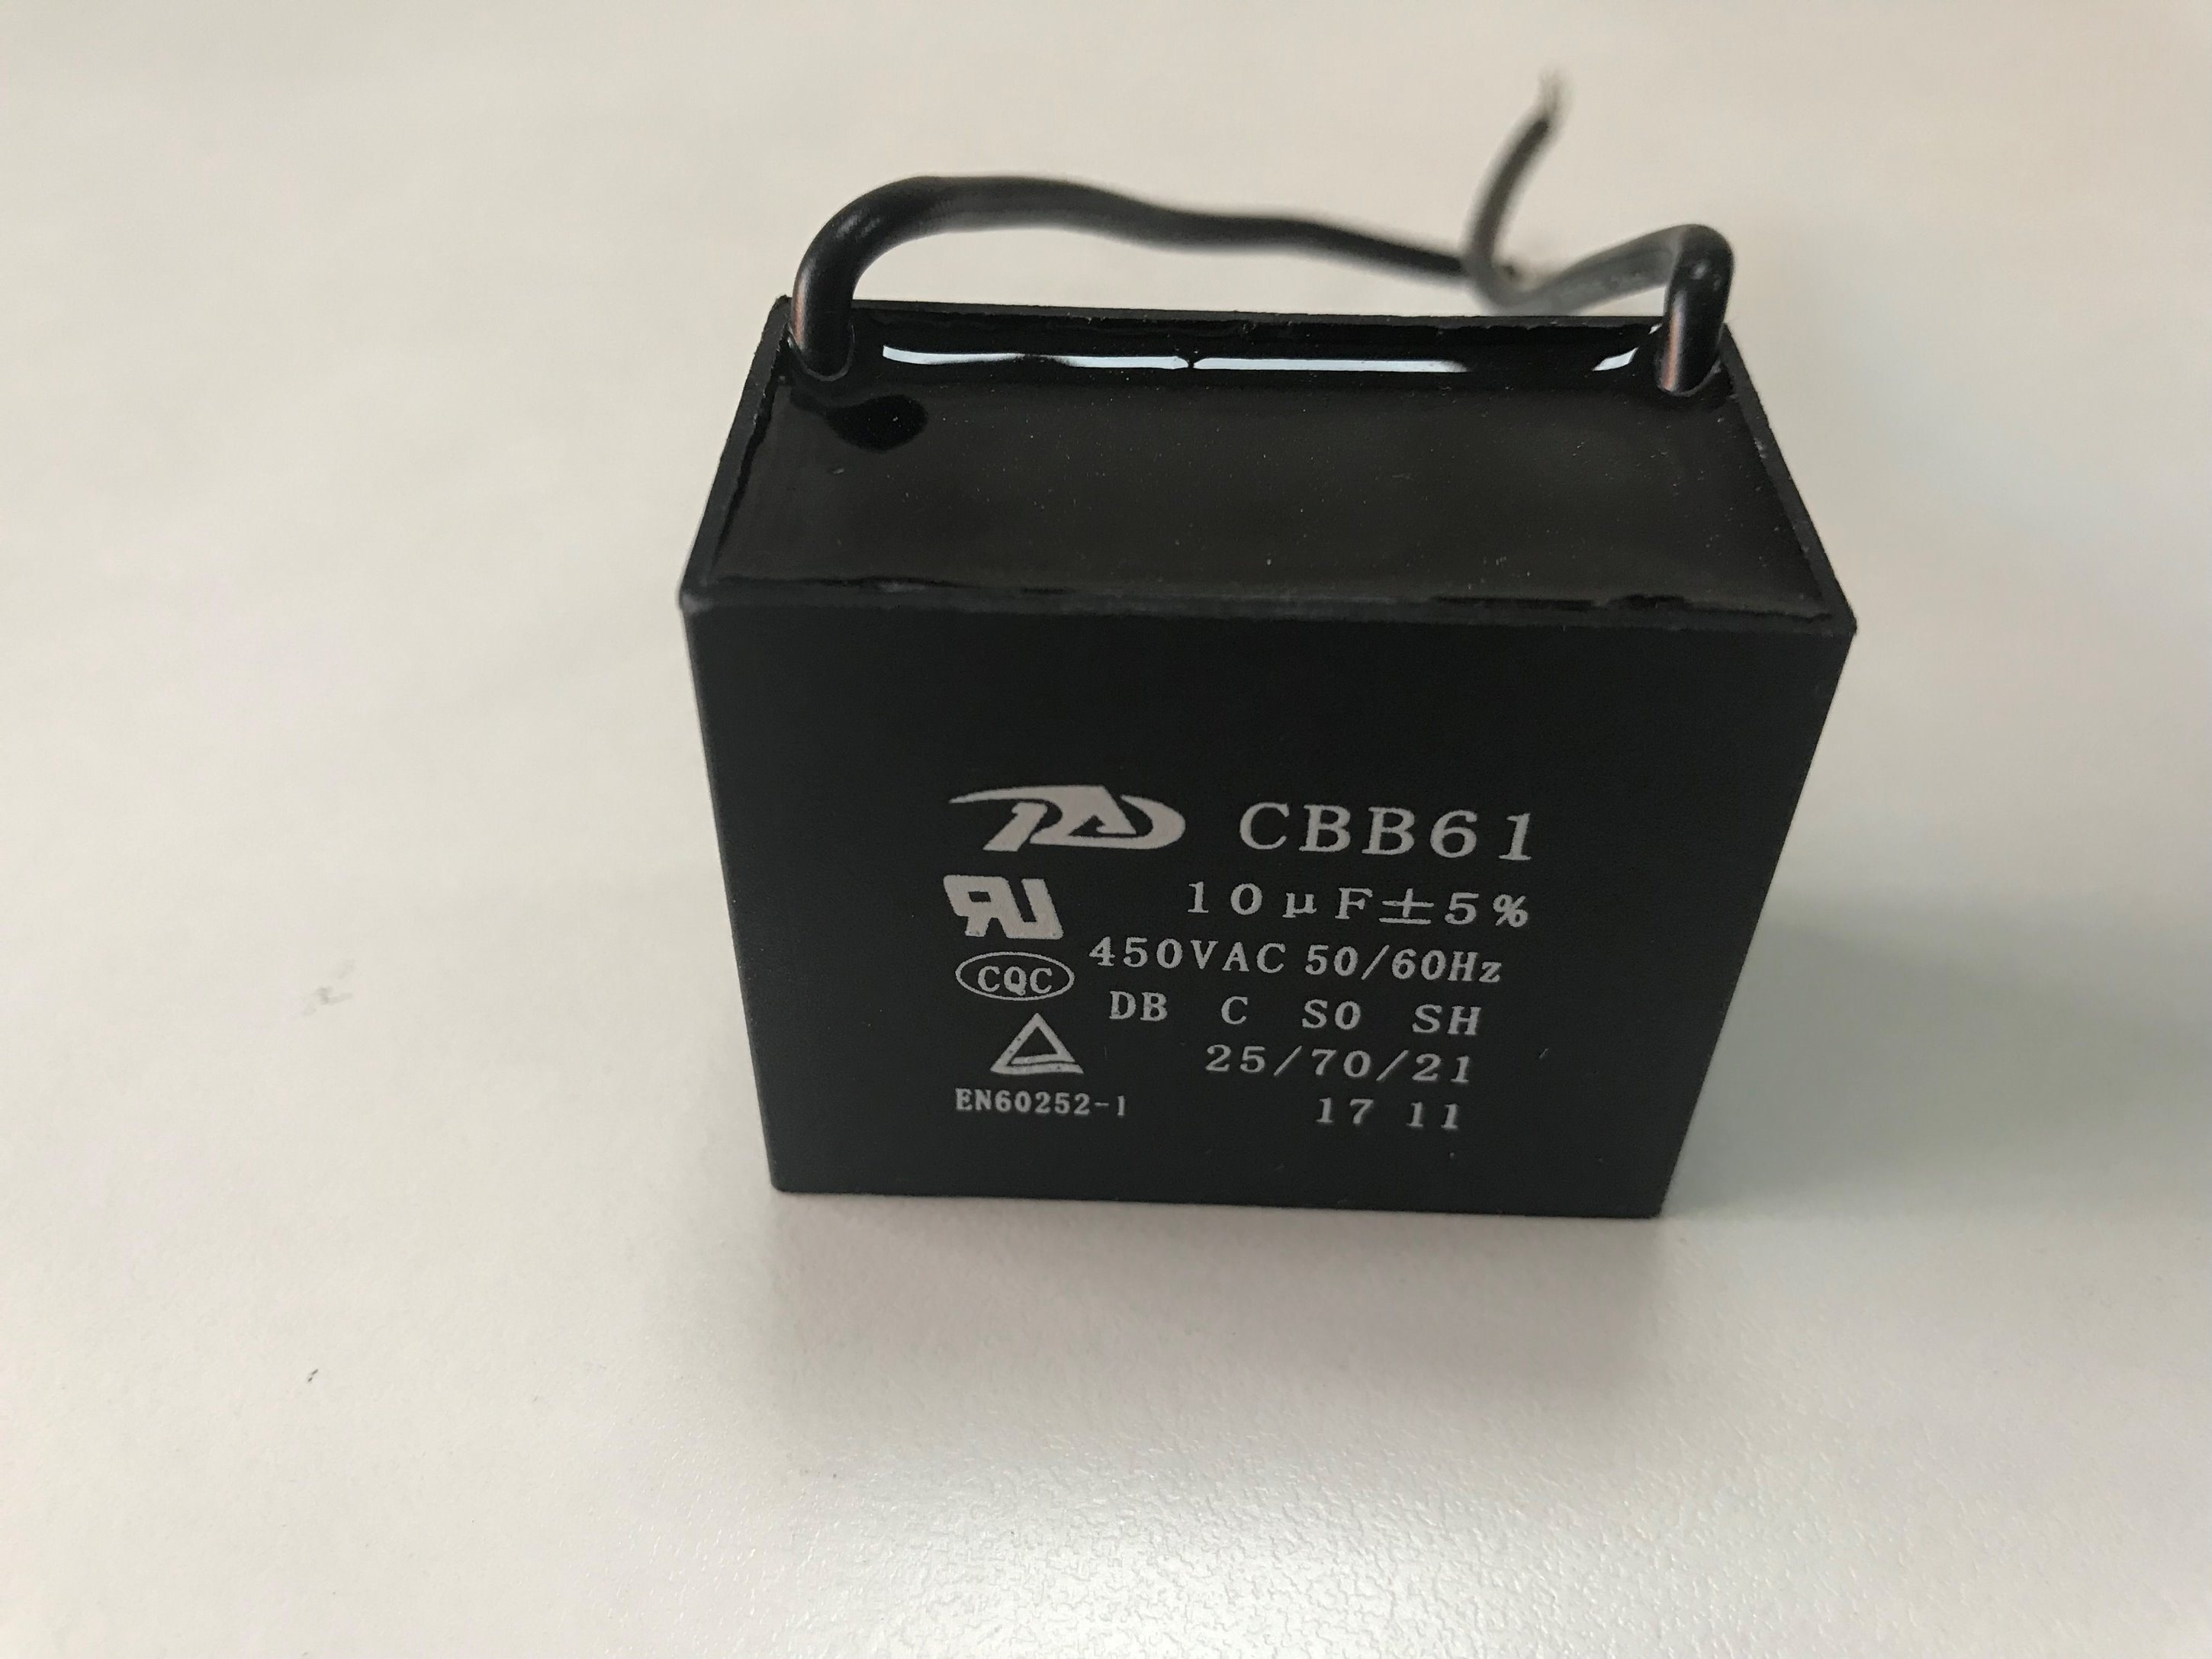 Film Capacitor Qualifed by UL. TUV. CQC (CBB61)